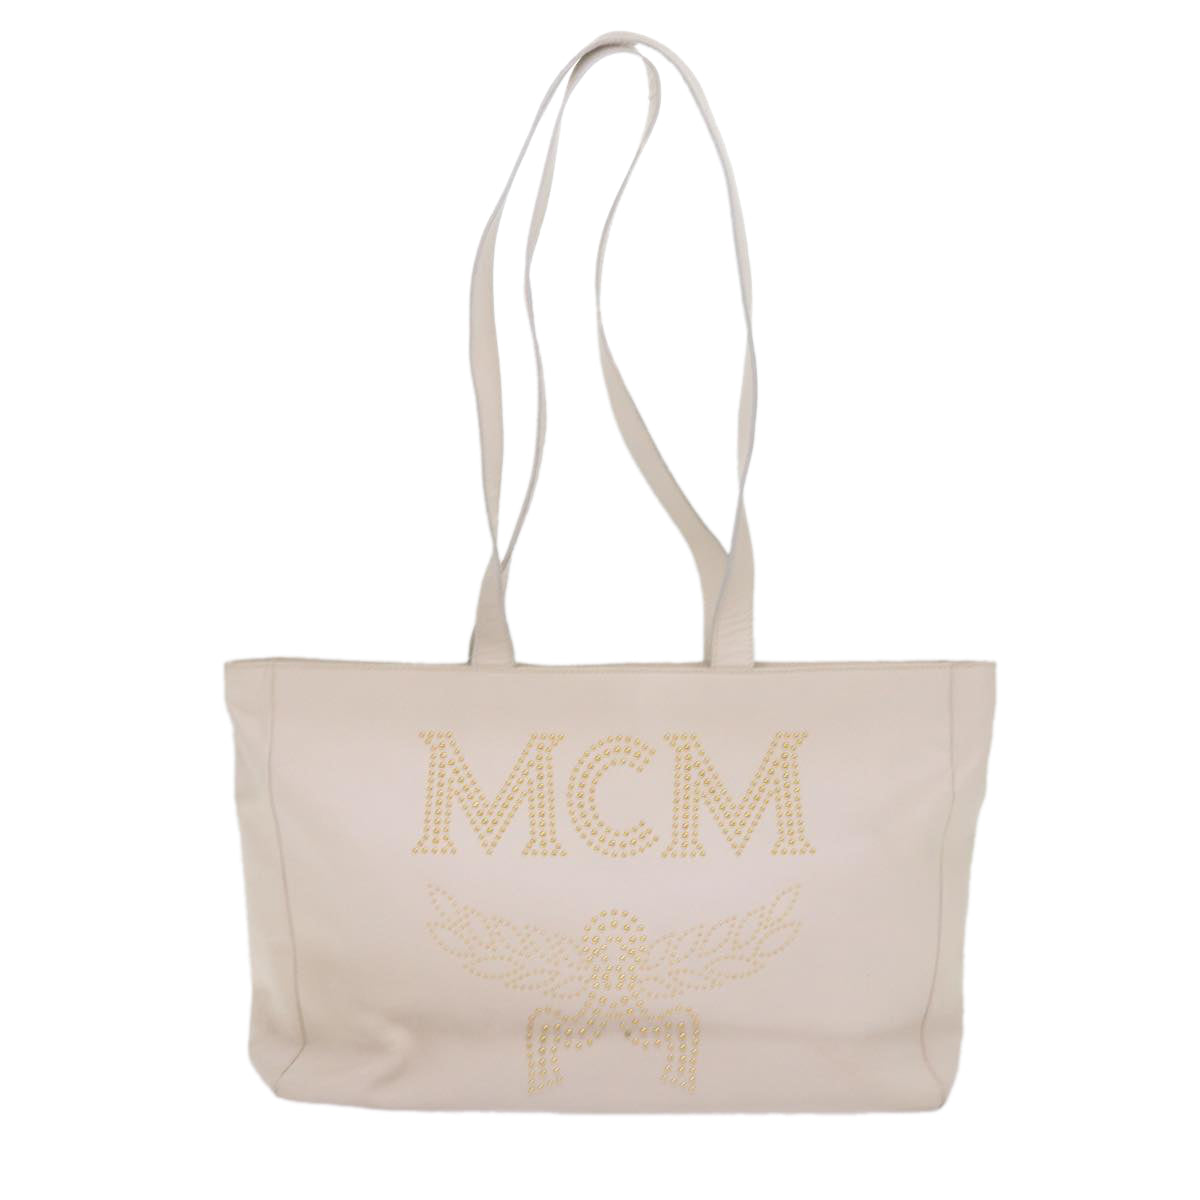 MCM Vicetos Logogram Shoulder Bag Leather 3Set Black Brown white Auth bs11980